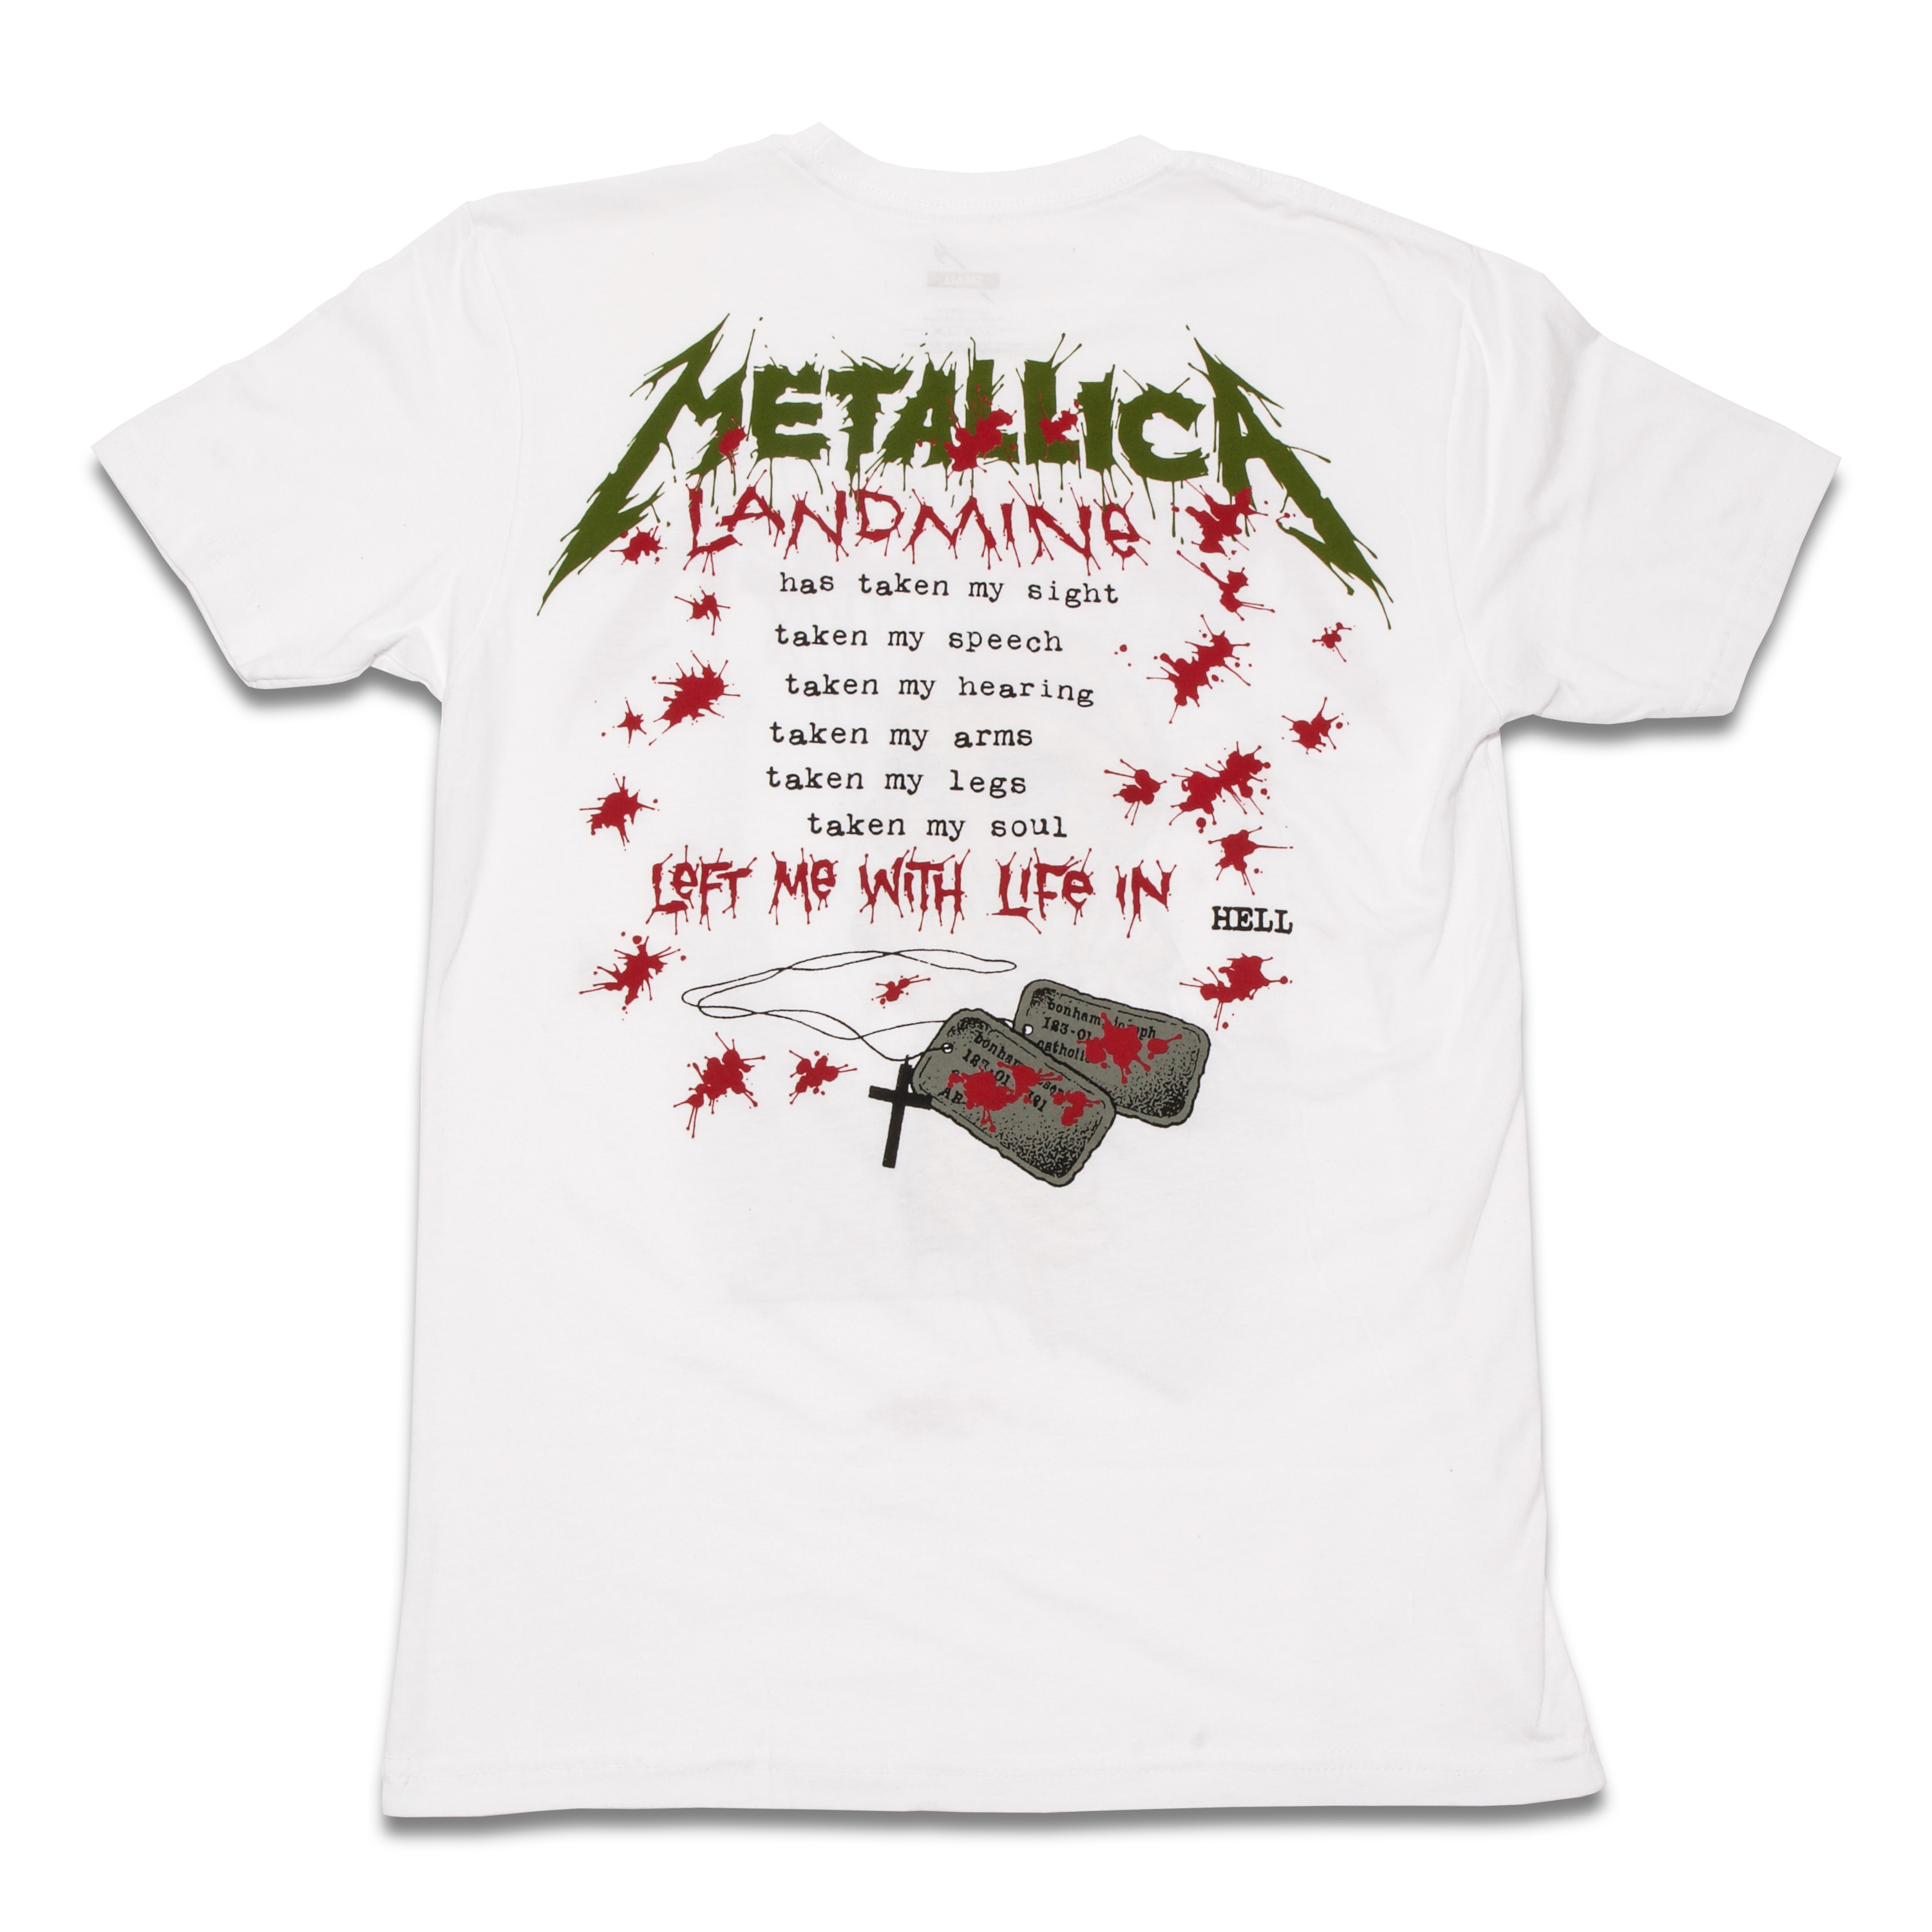 insect te ontvangen Van storm One Classic White T-Shirt | Metallica.com